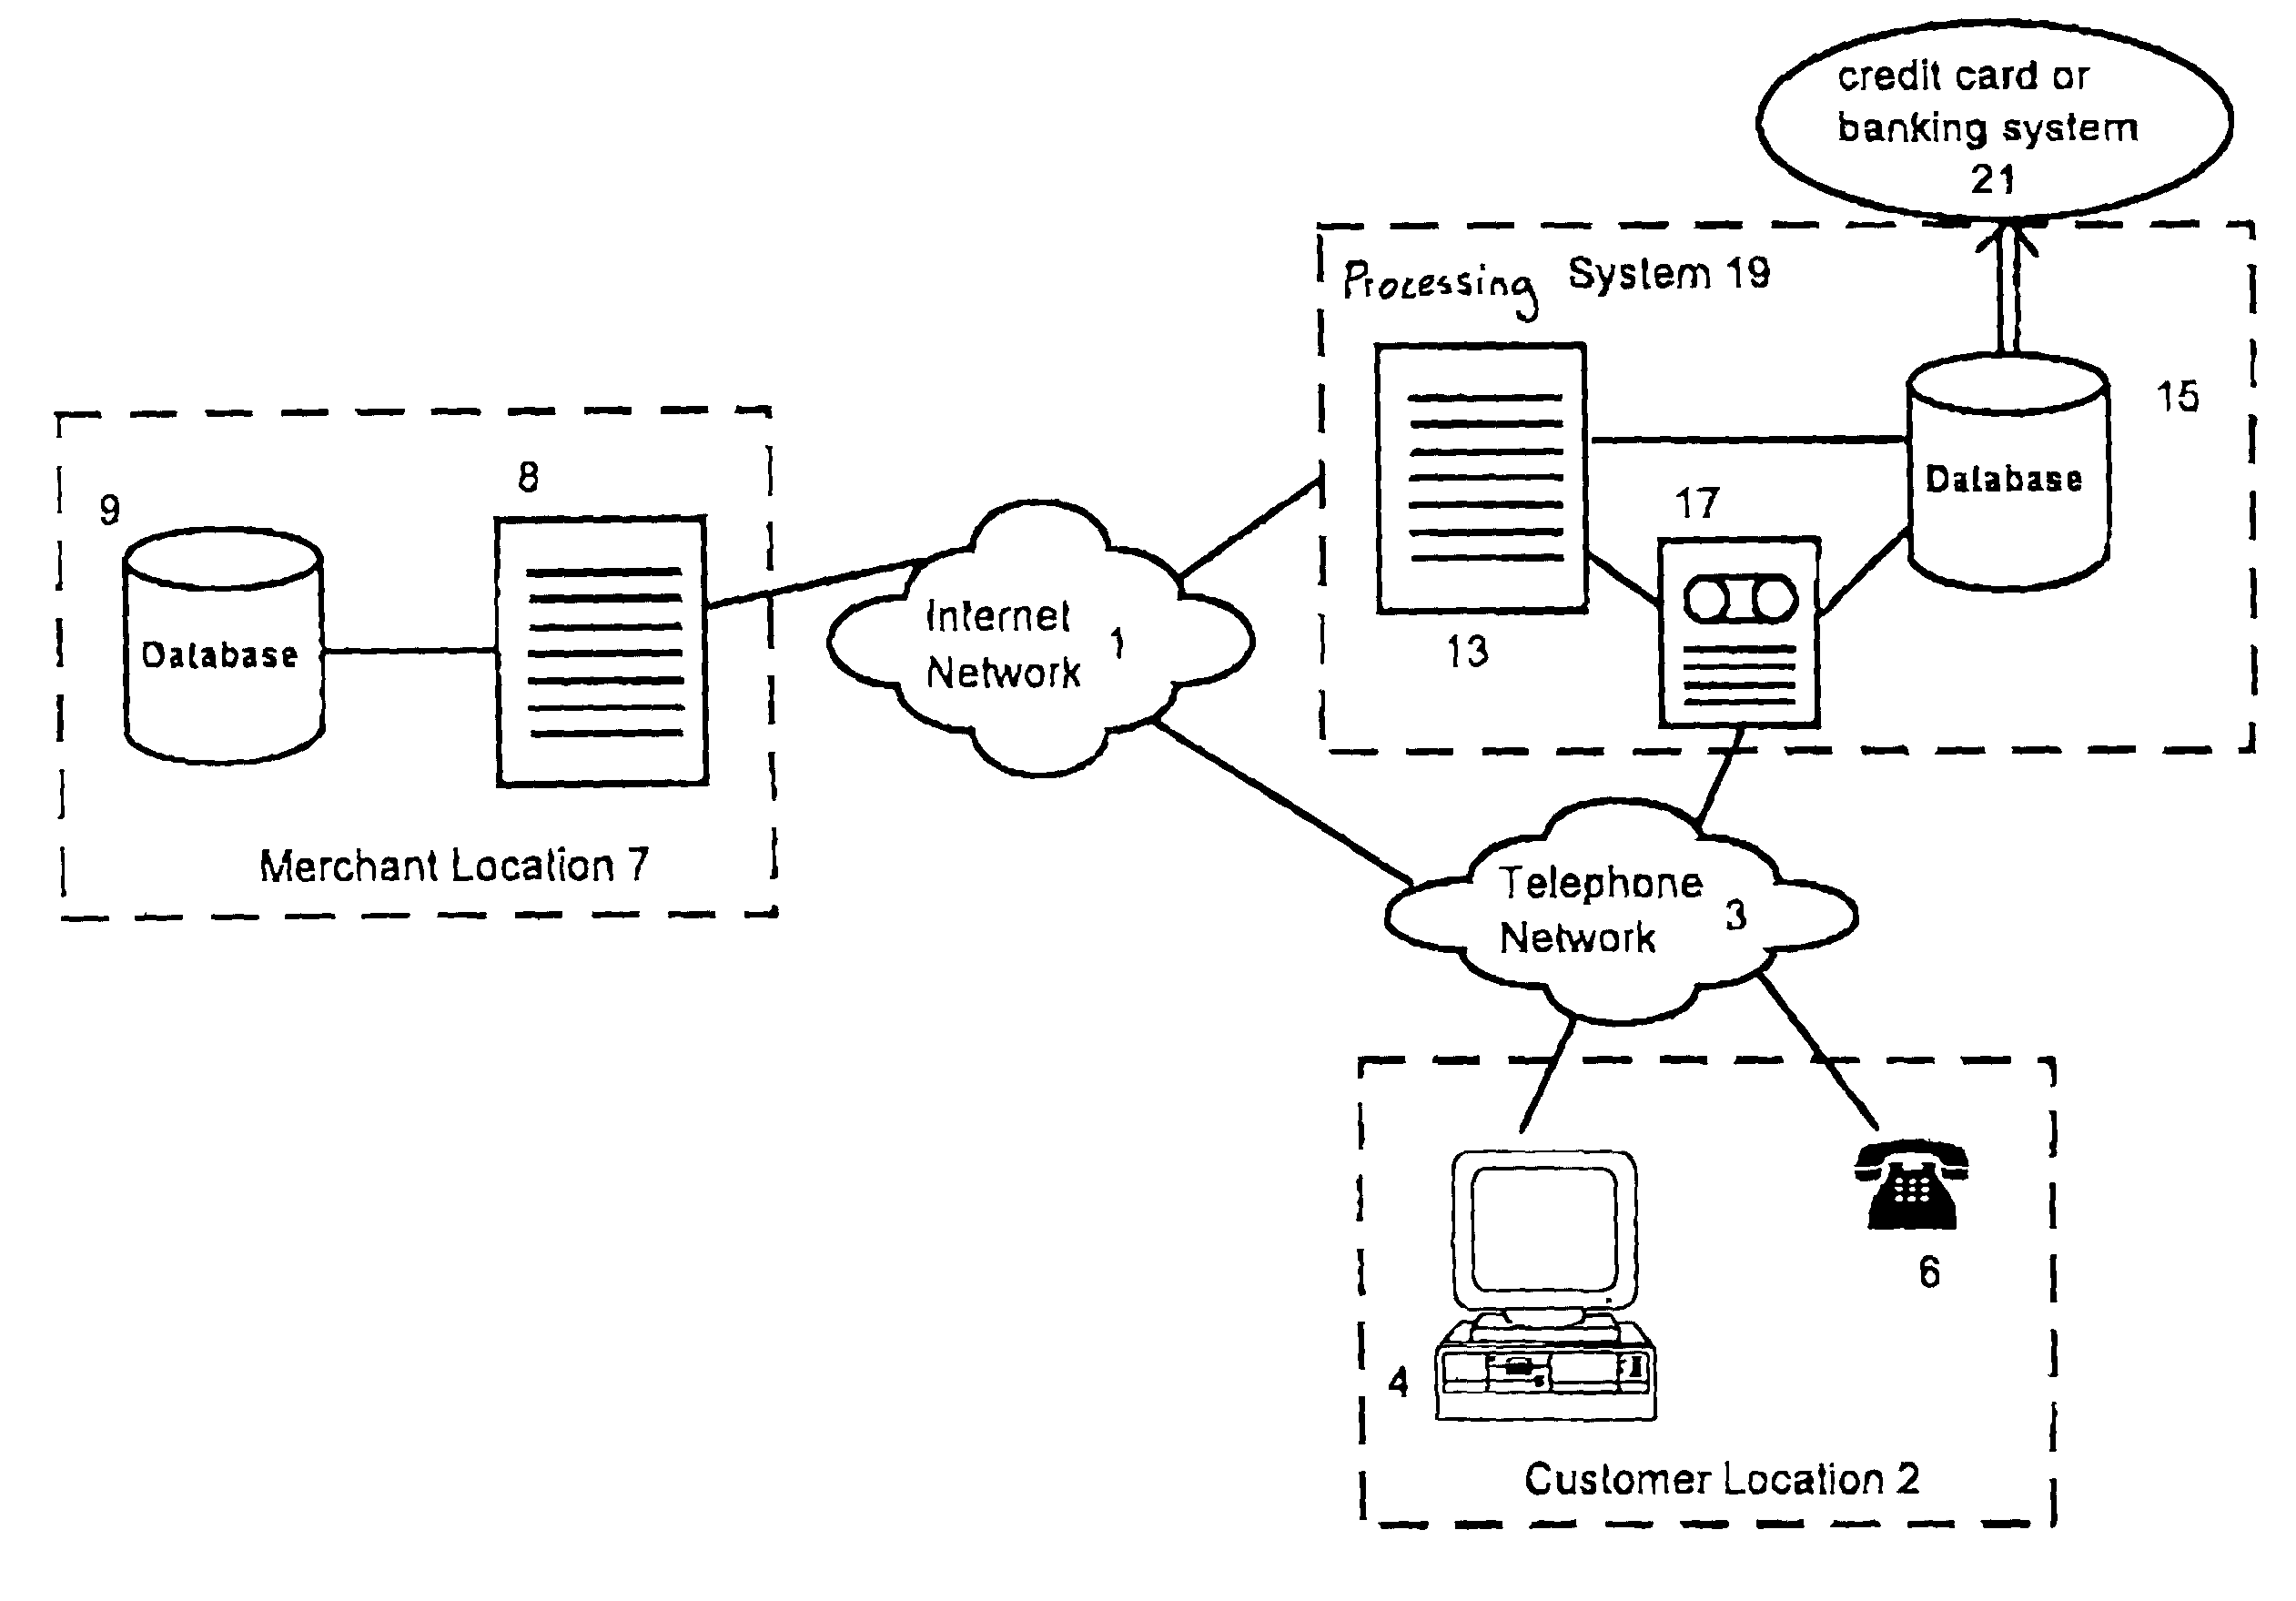 Transaction processing system